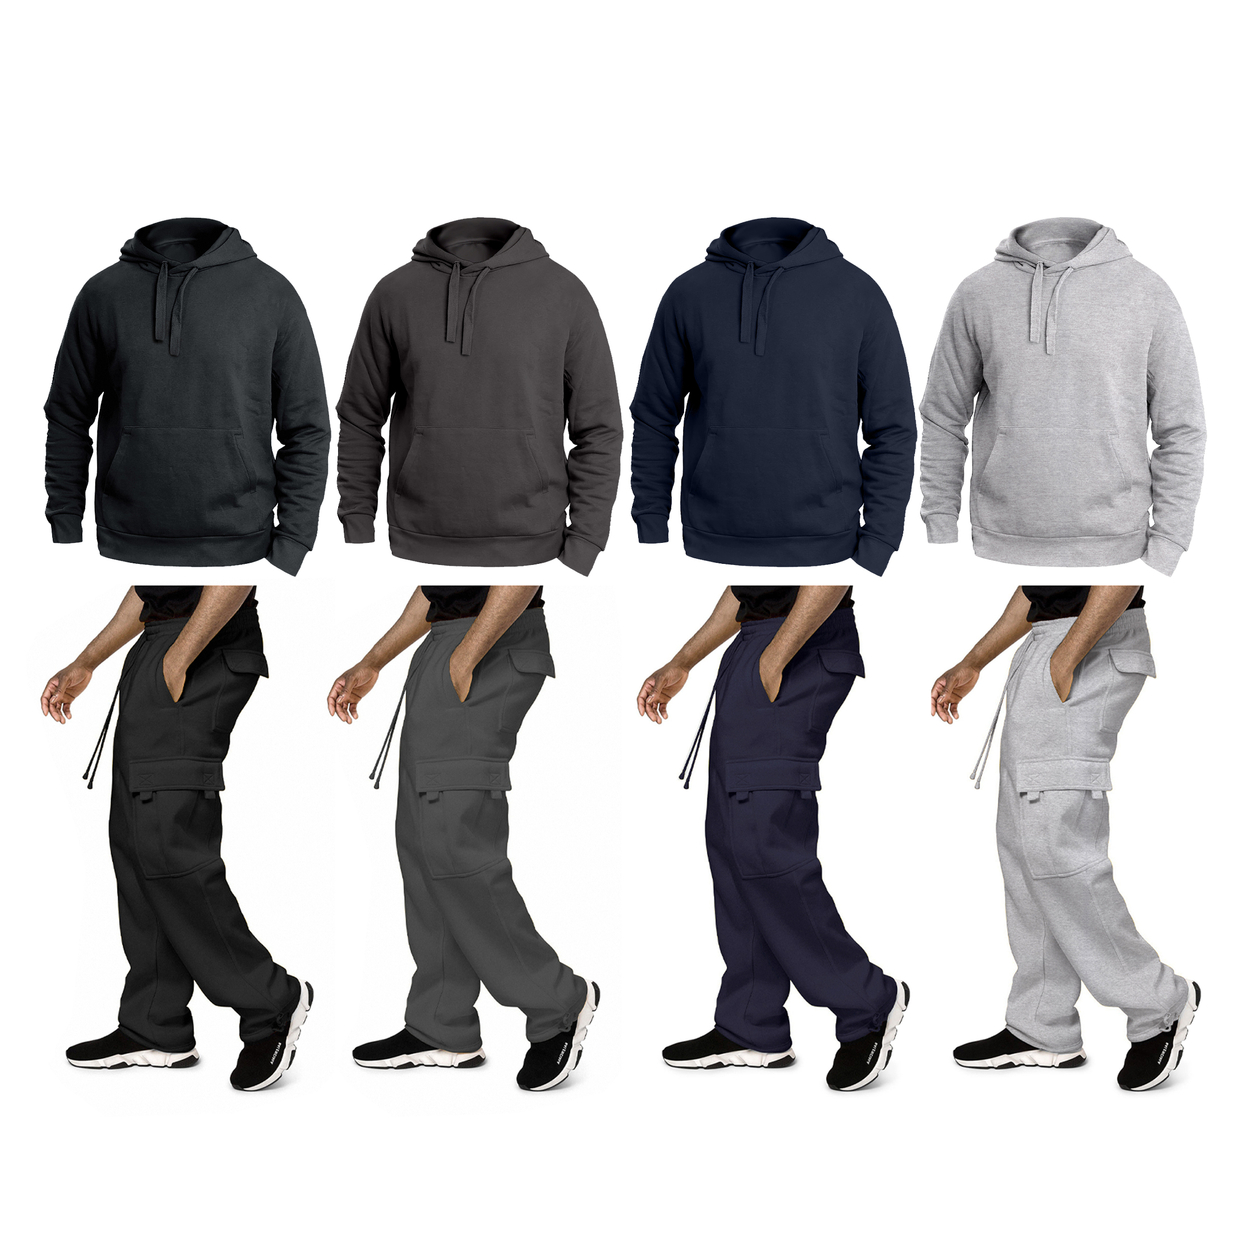 Multi-Pack: Big & Tall Men's Winter Warm Cozy Athletic Fleece Lined Multi-Pocket Cargo Sweatsuit - Black, 2-pack, Medium